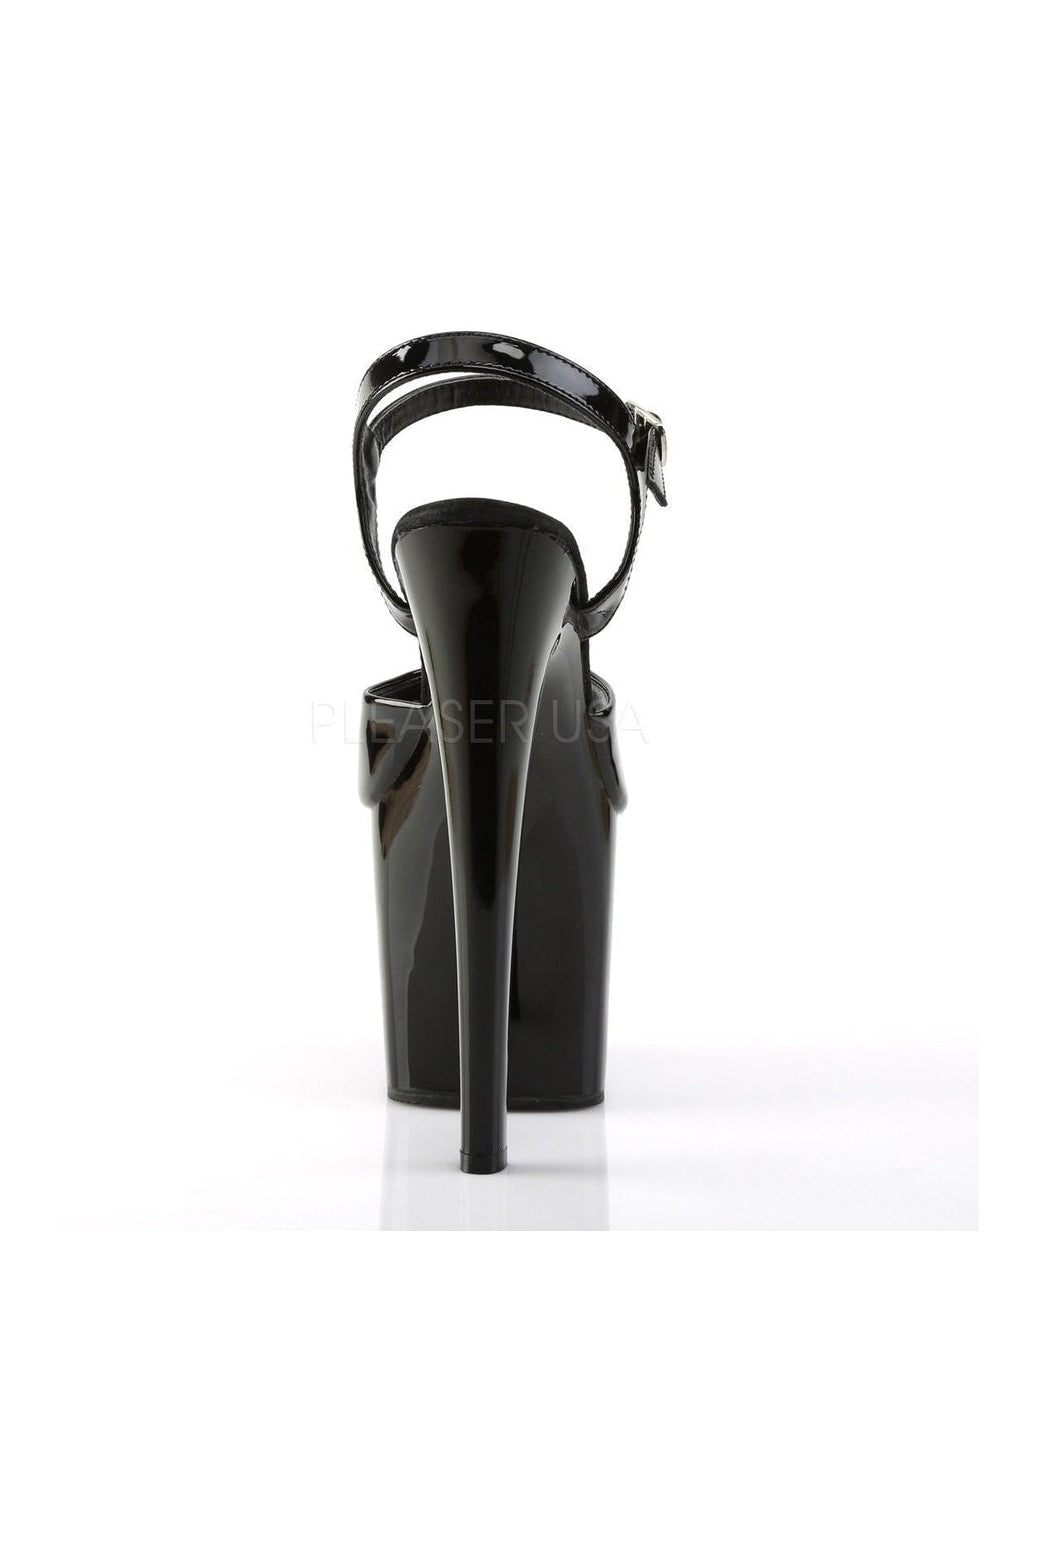 TABOO-709 Platform Sandal | Black Patent-Pleaser-Sandals-SEXYSHOES.COM